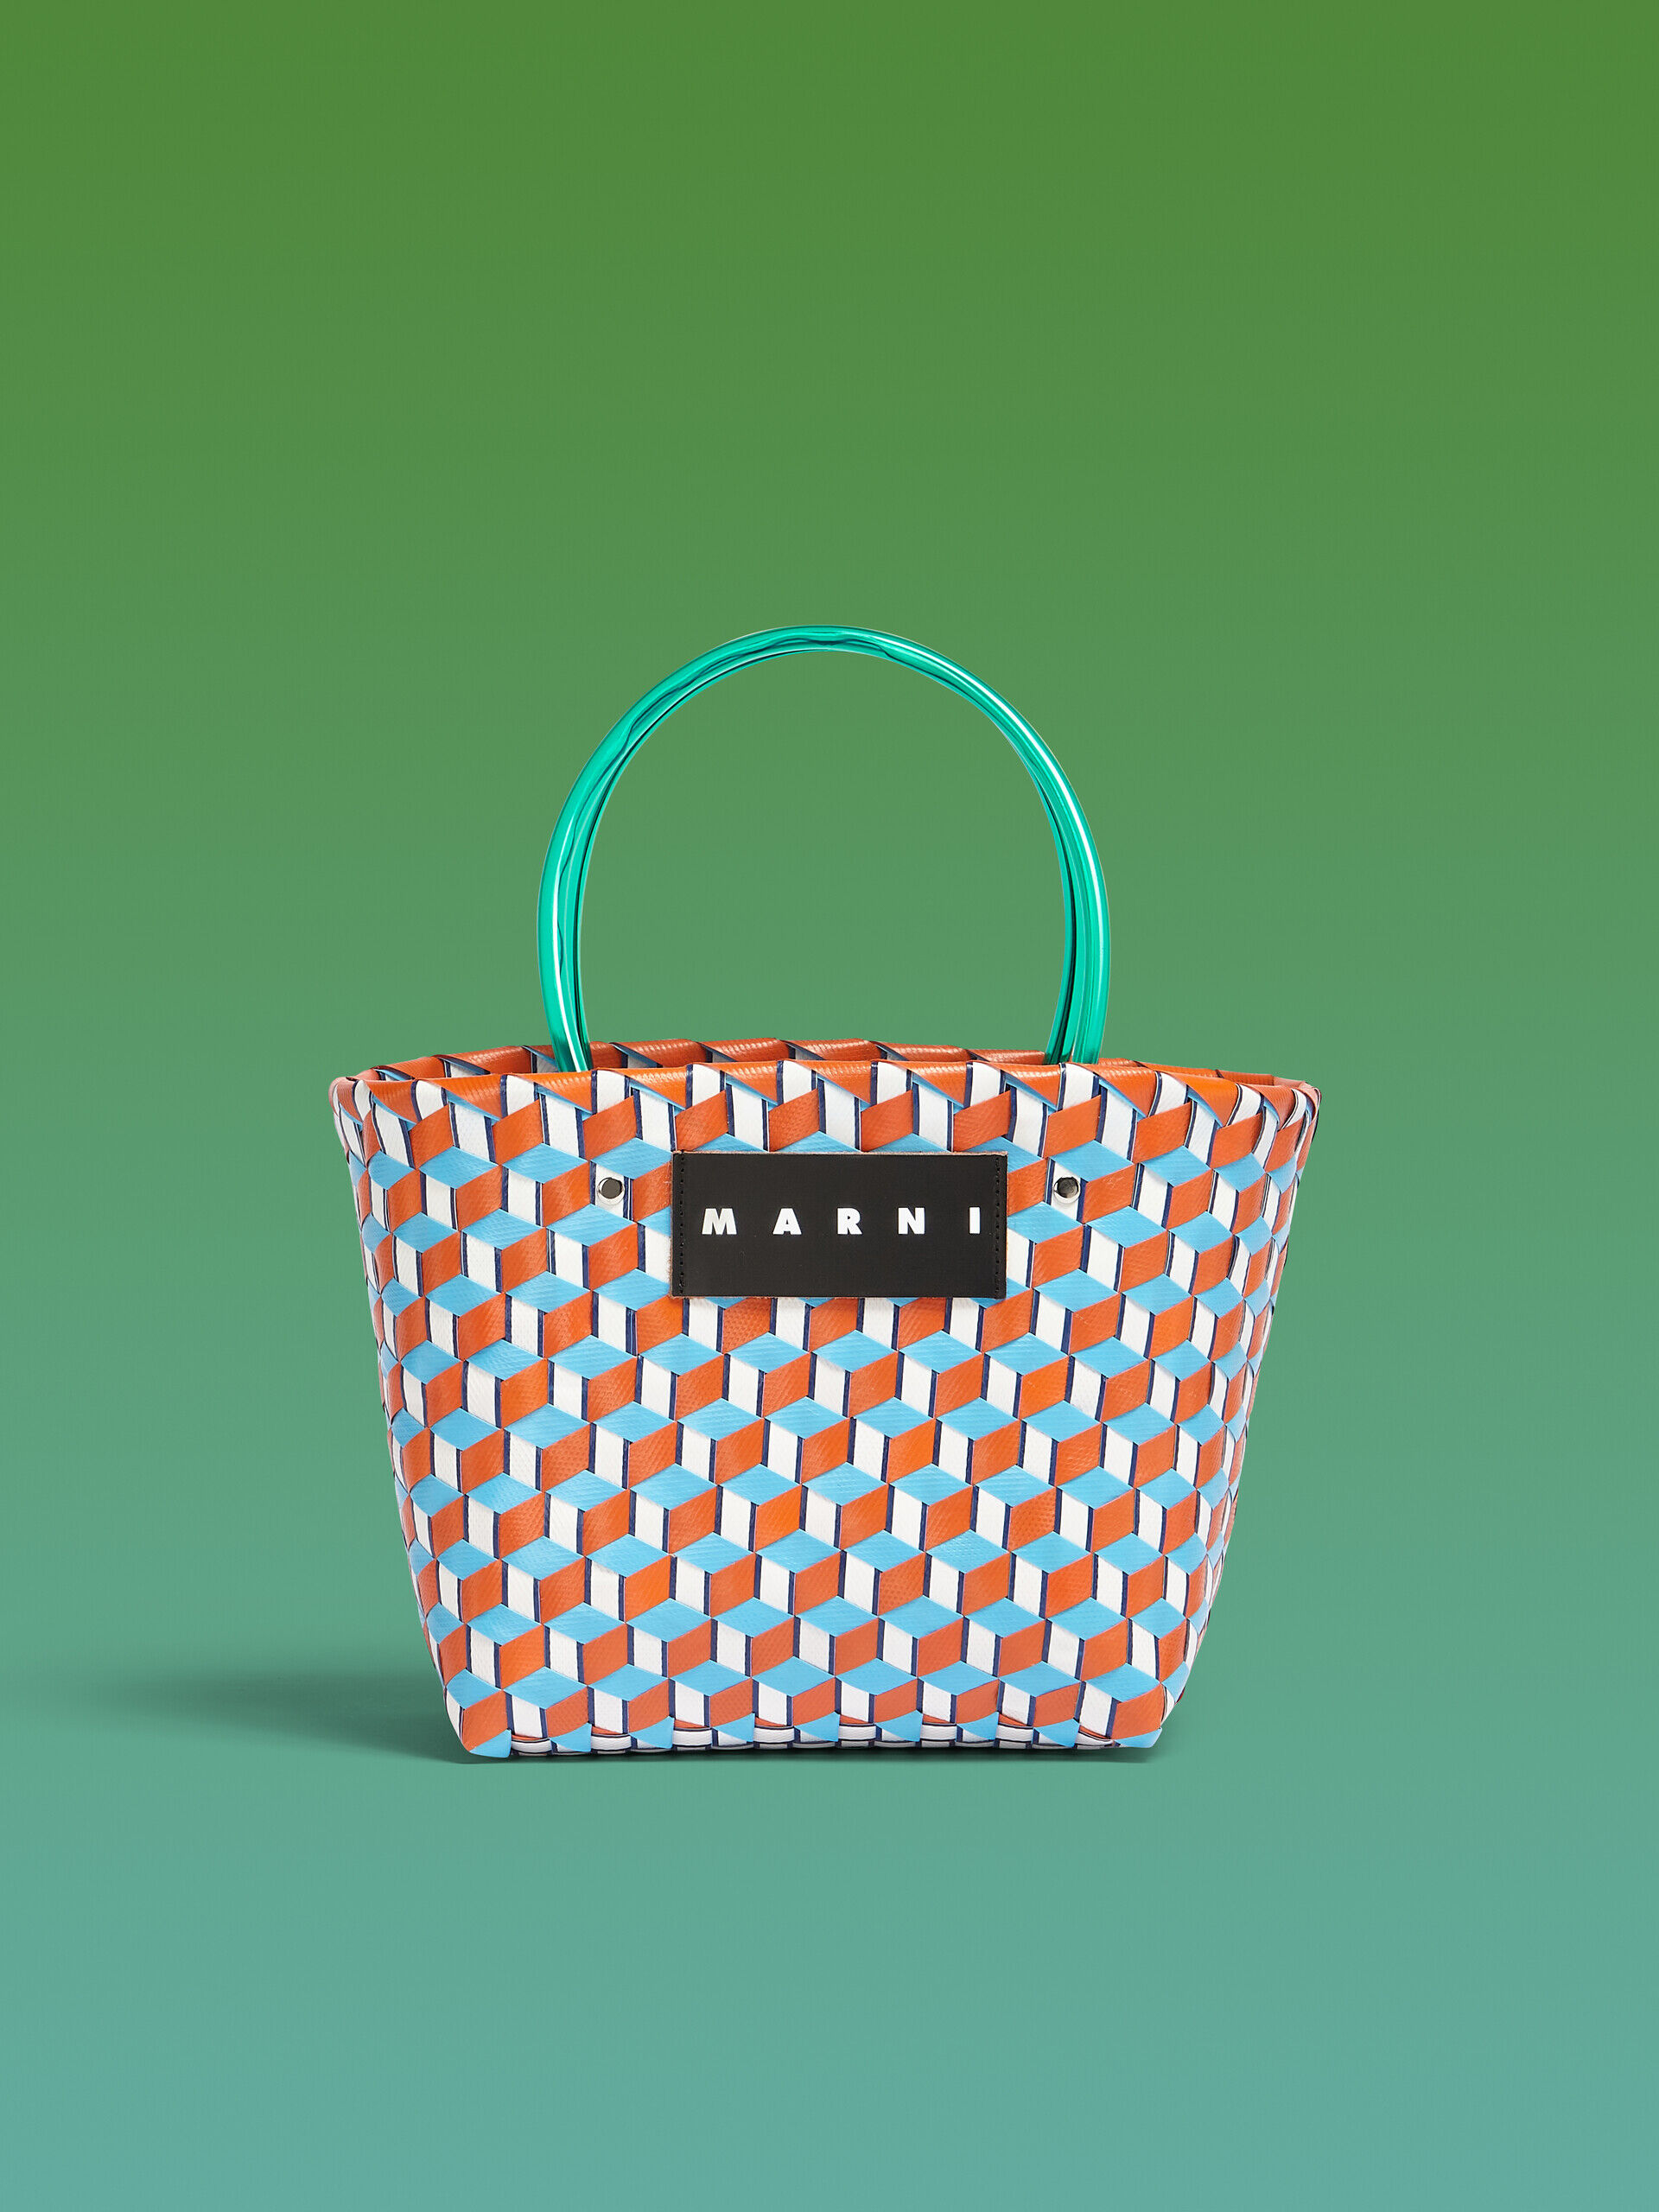 MARNI MARKET 3D BAG in orange cube woven material | Marni